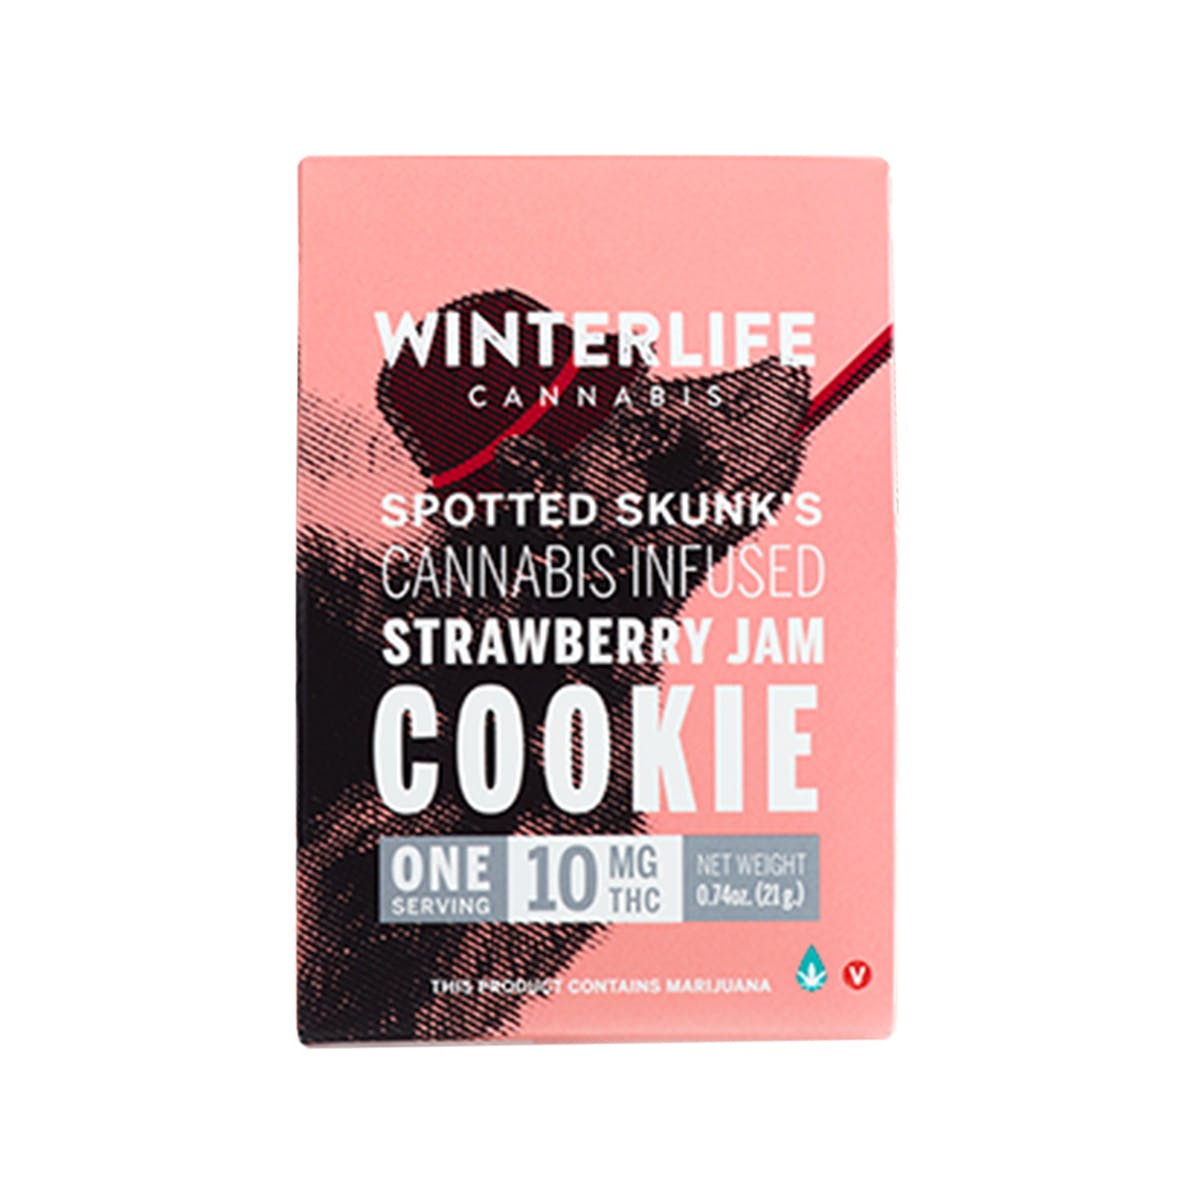 edible-winterlife-cannabis-spotted-skunks-strawberry-jam-cookies-10-mg